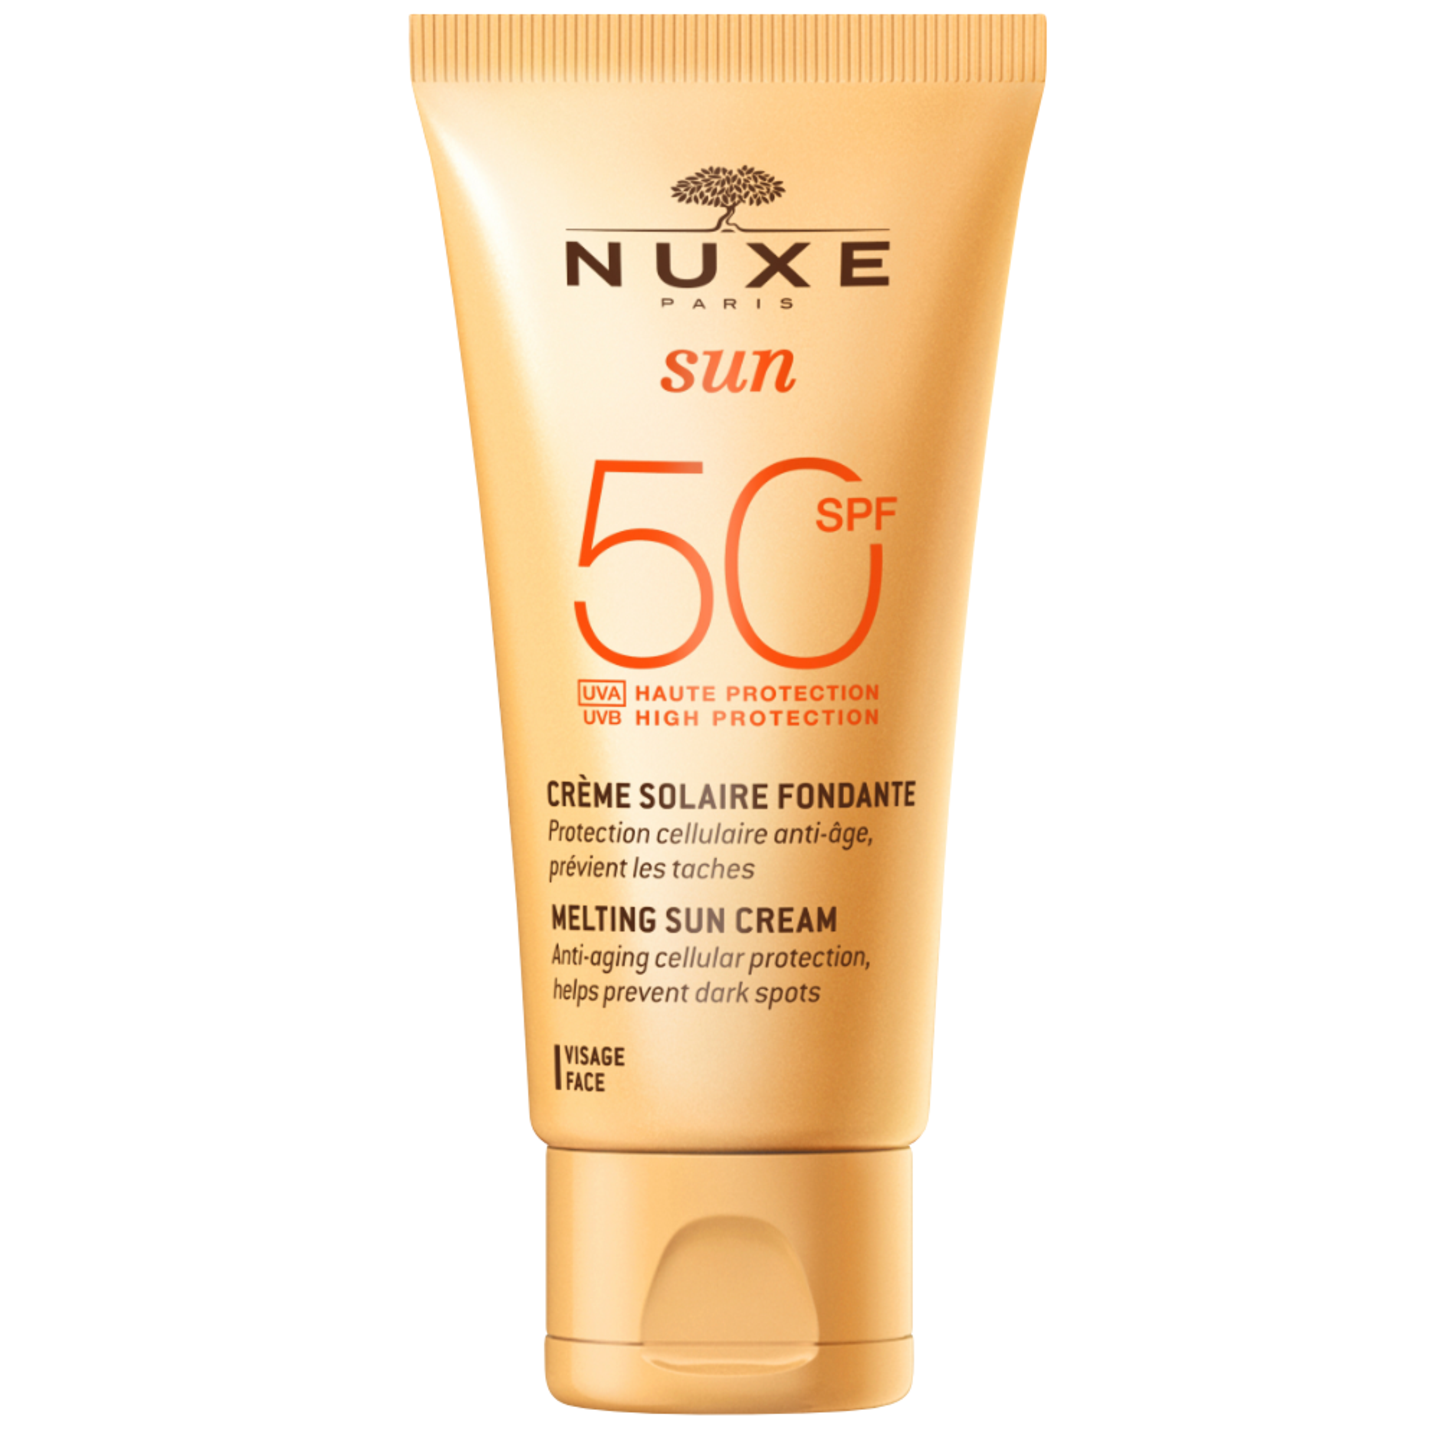 Vorbeugend: "Melting Sun Cream High Protection SPF 50 Face“ von Nuxe, ungefähr 26 Euro.